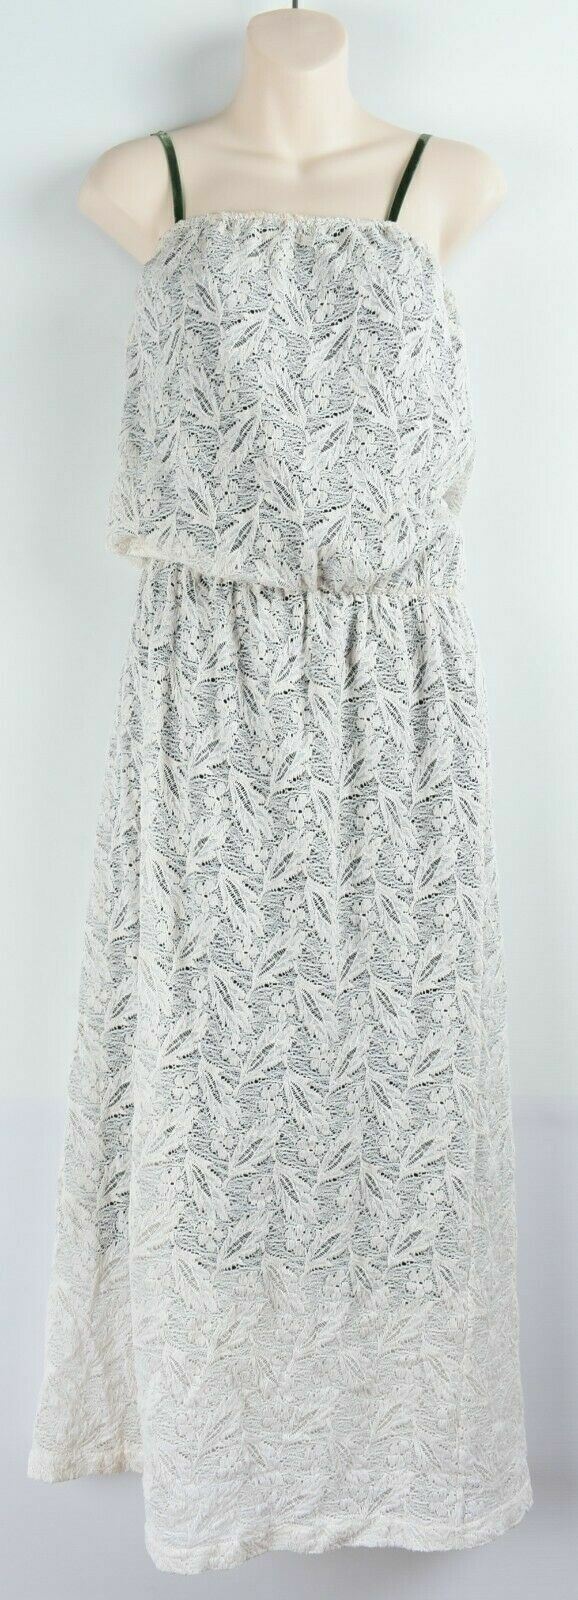 ROSEANNA Women's Cotton Lace Midi Dress, Cream/Black, size UK 10